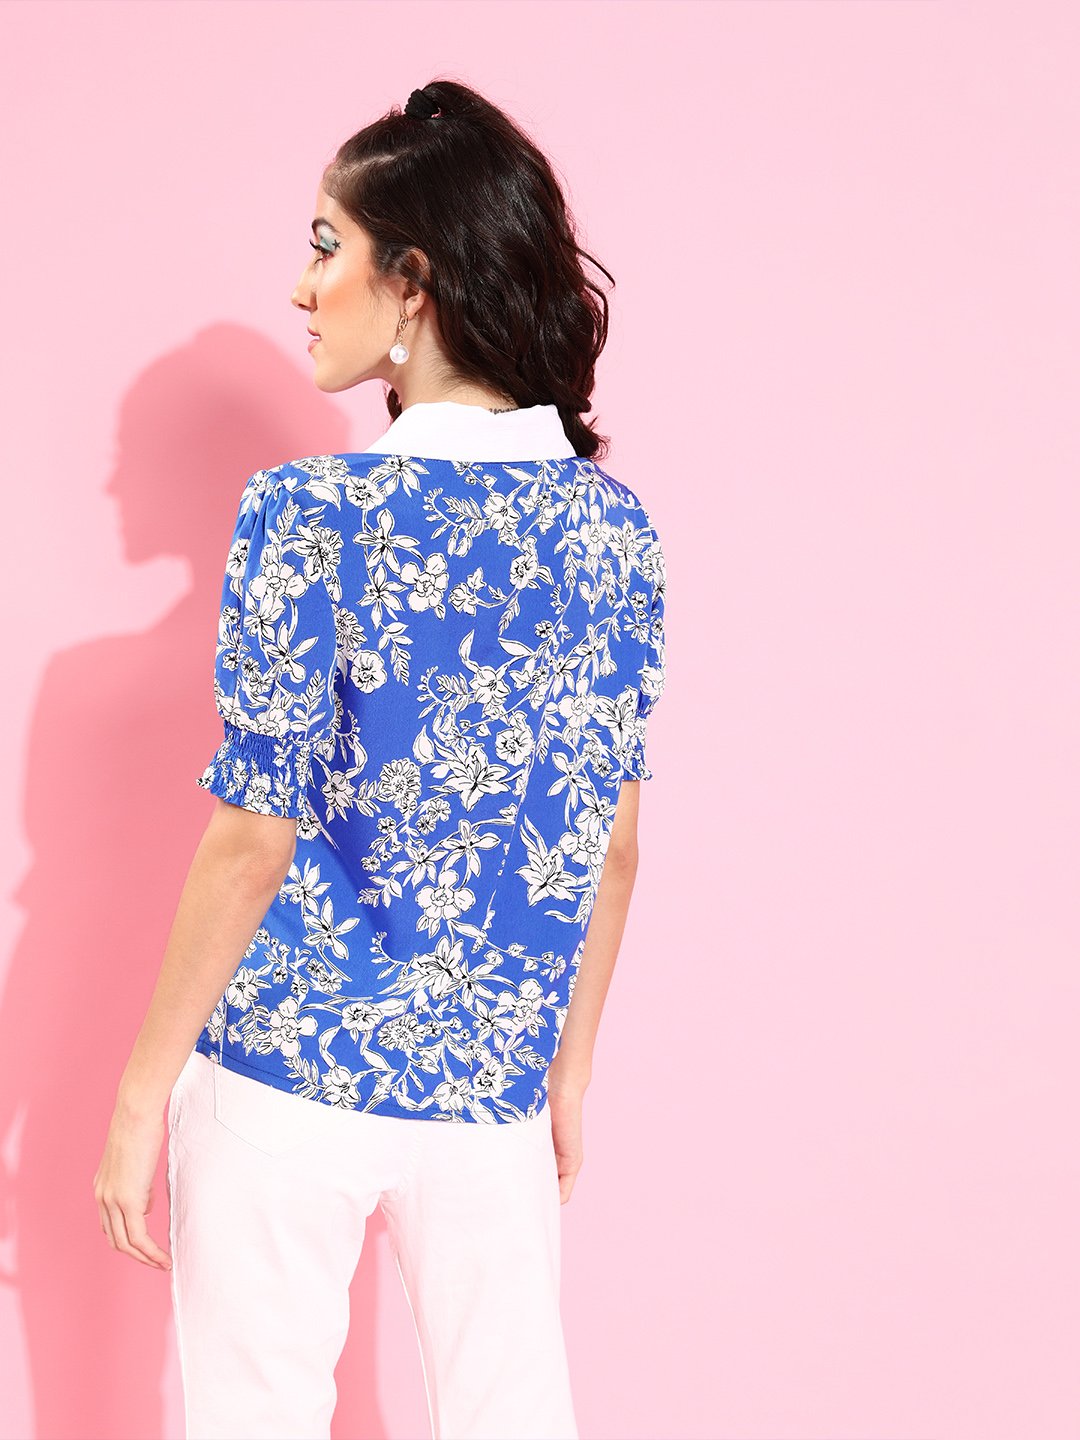 Stunning Blue Above the Keyboard Collar Floral Shirt